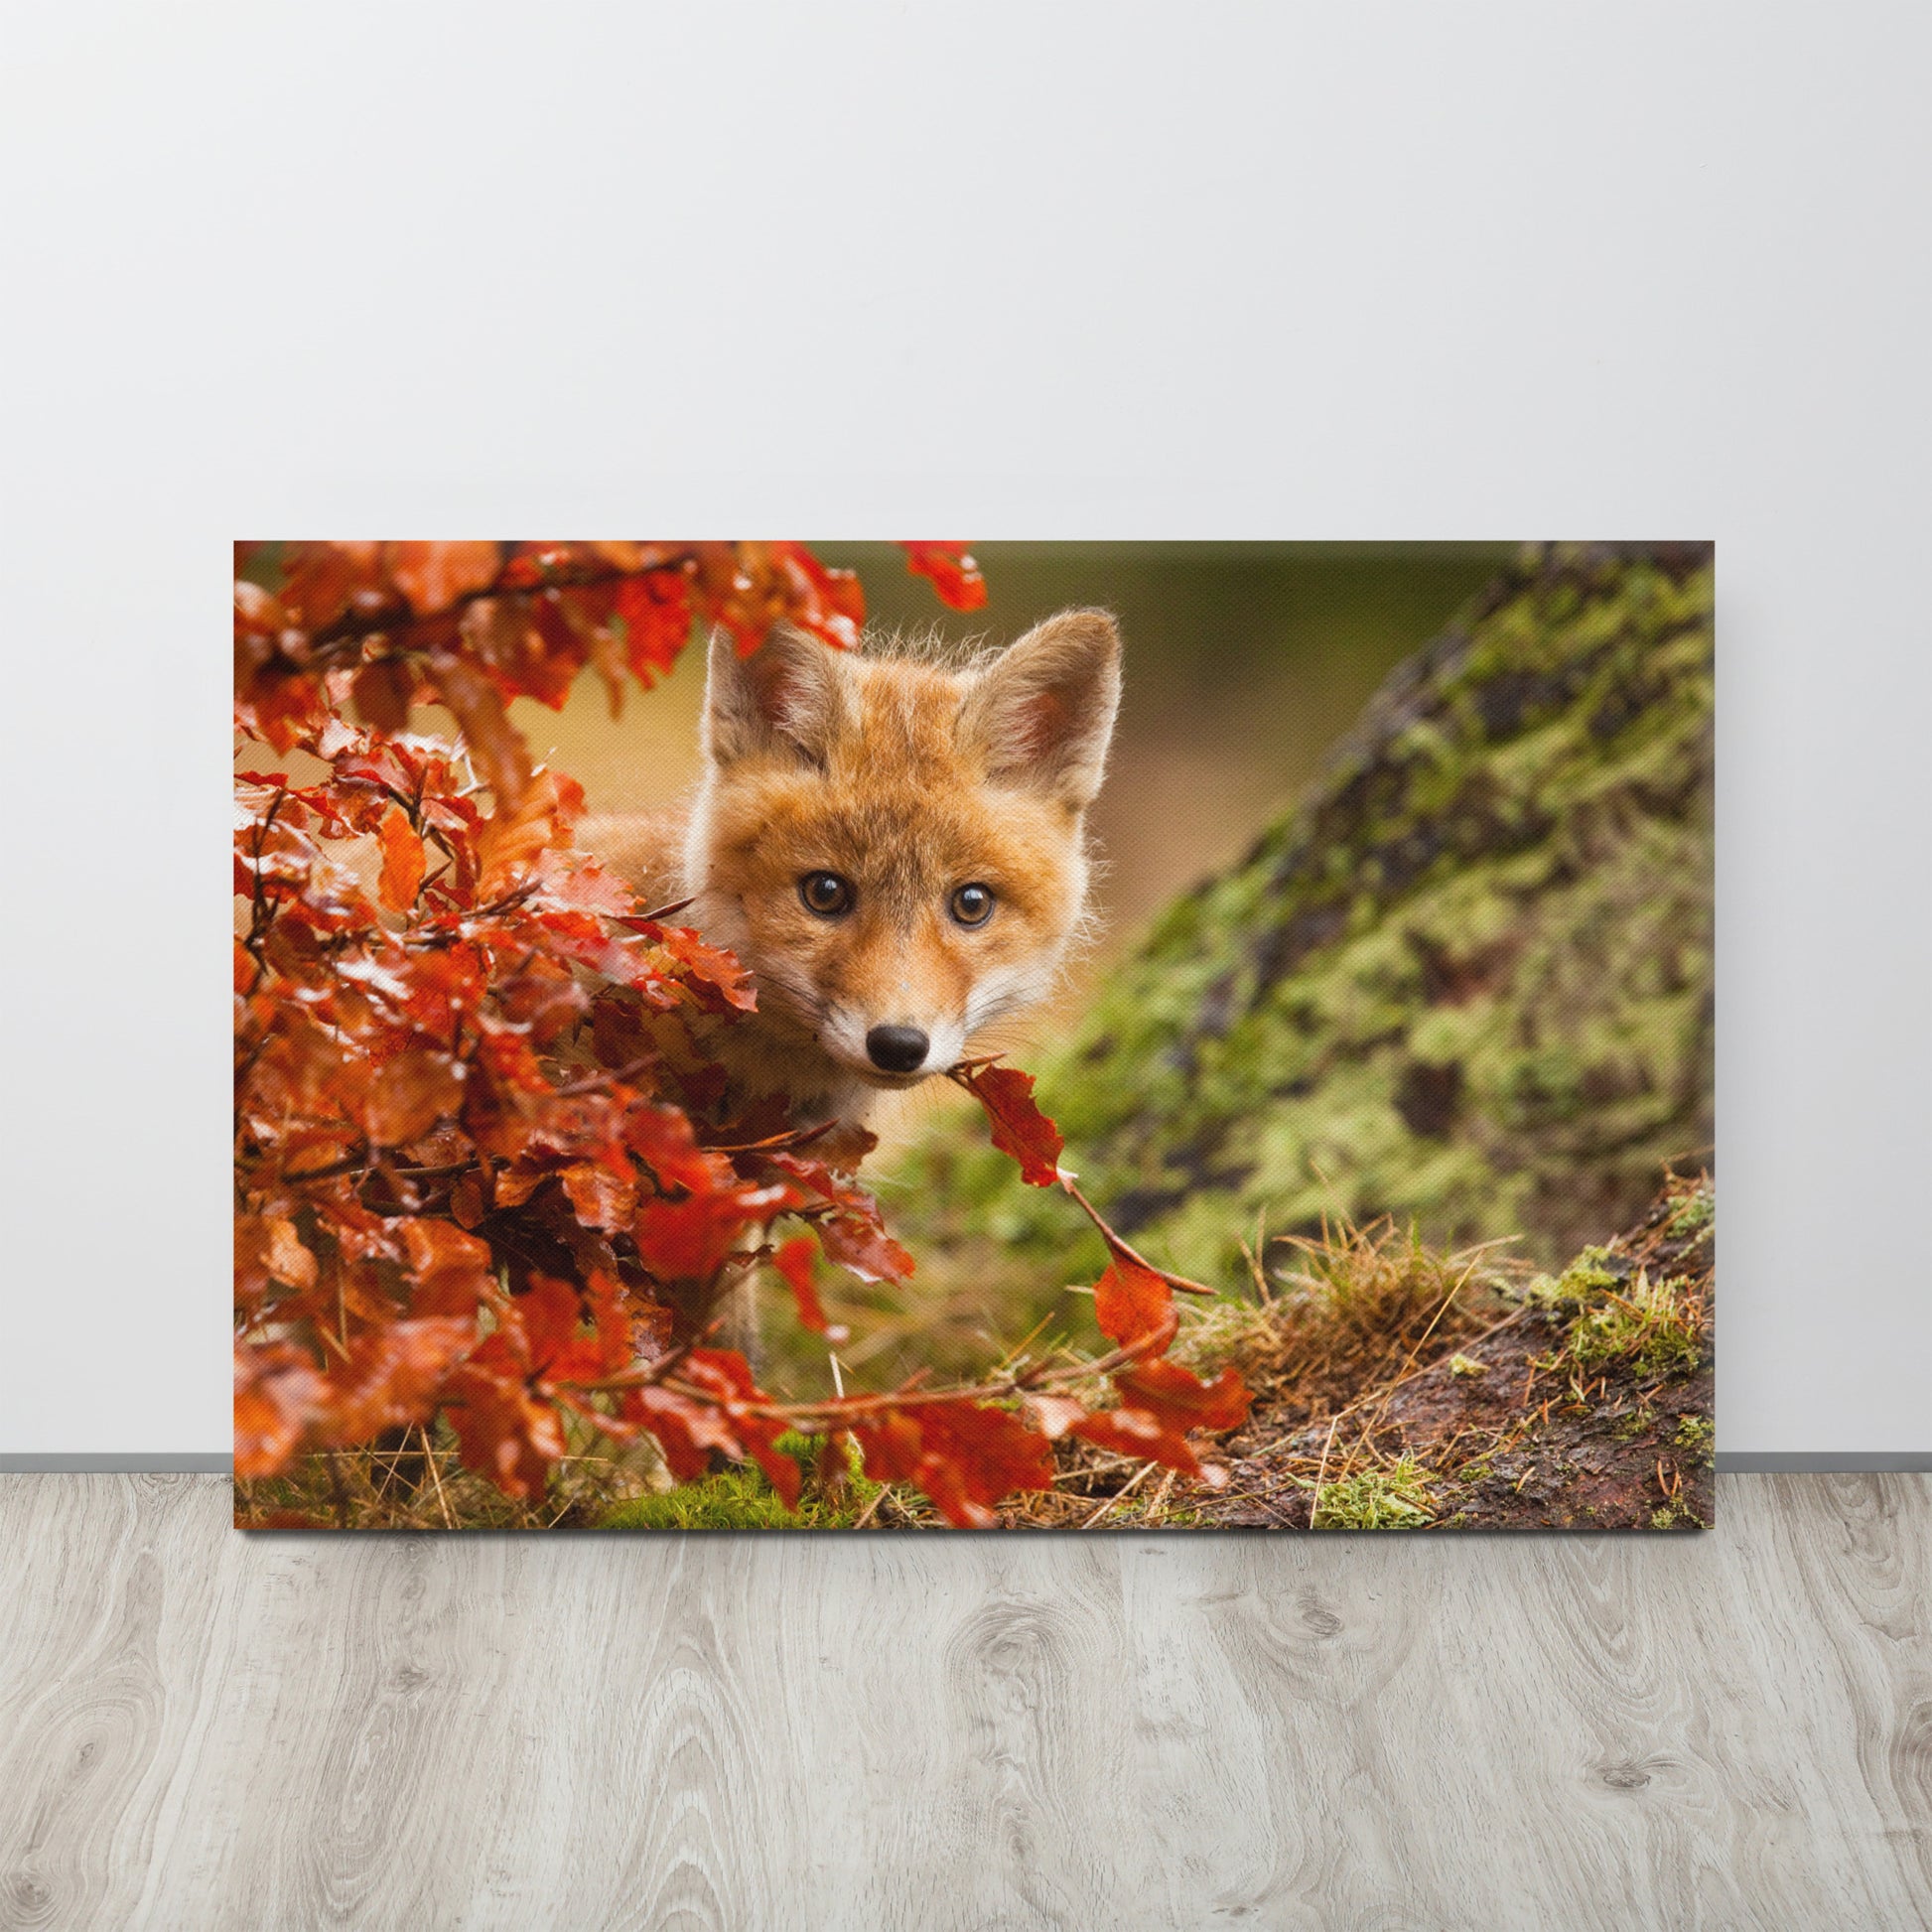 Nursery Canvas Prints: Peek-A-Boo Baby Fox Pup And Fall Leaves - Animal / Wildlife / Nature Photograph Canvas Artwork - Wall Decor